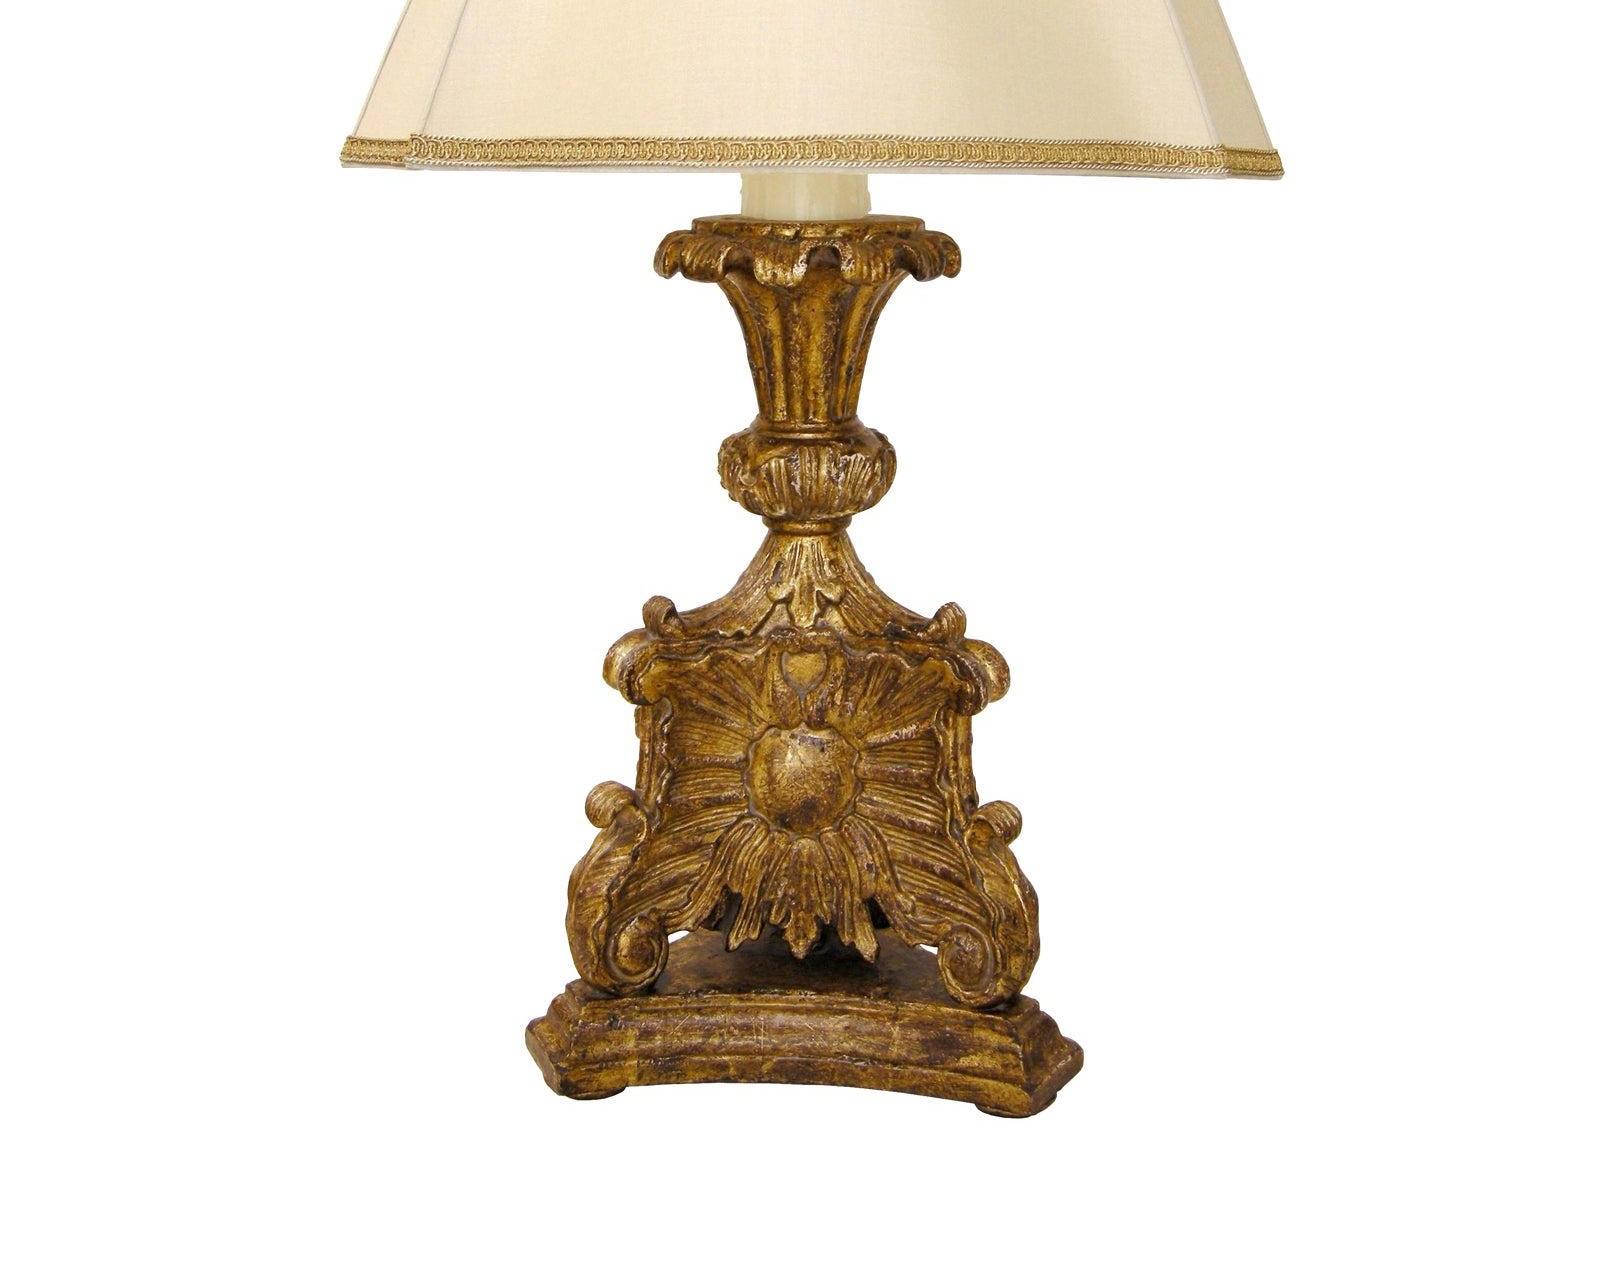 Unusual carved Italian giltwood table lamp by Randy Esada.